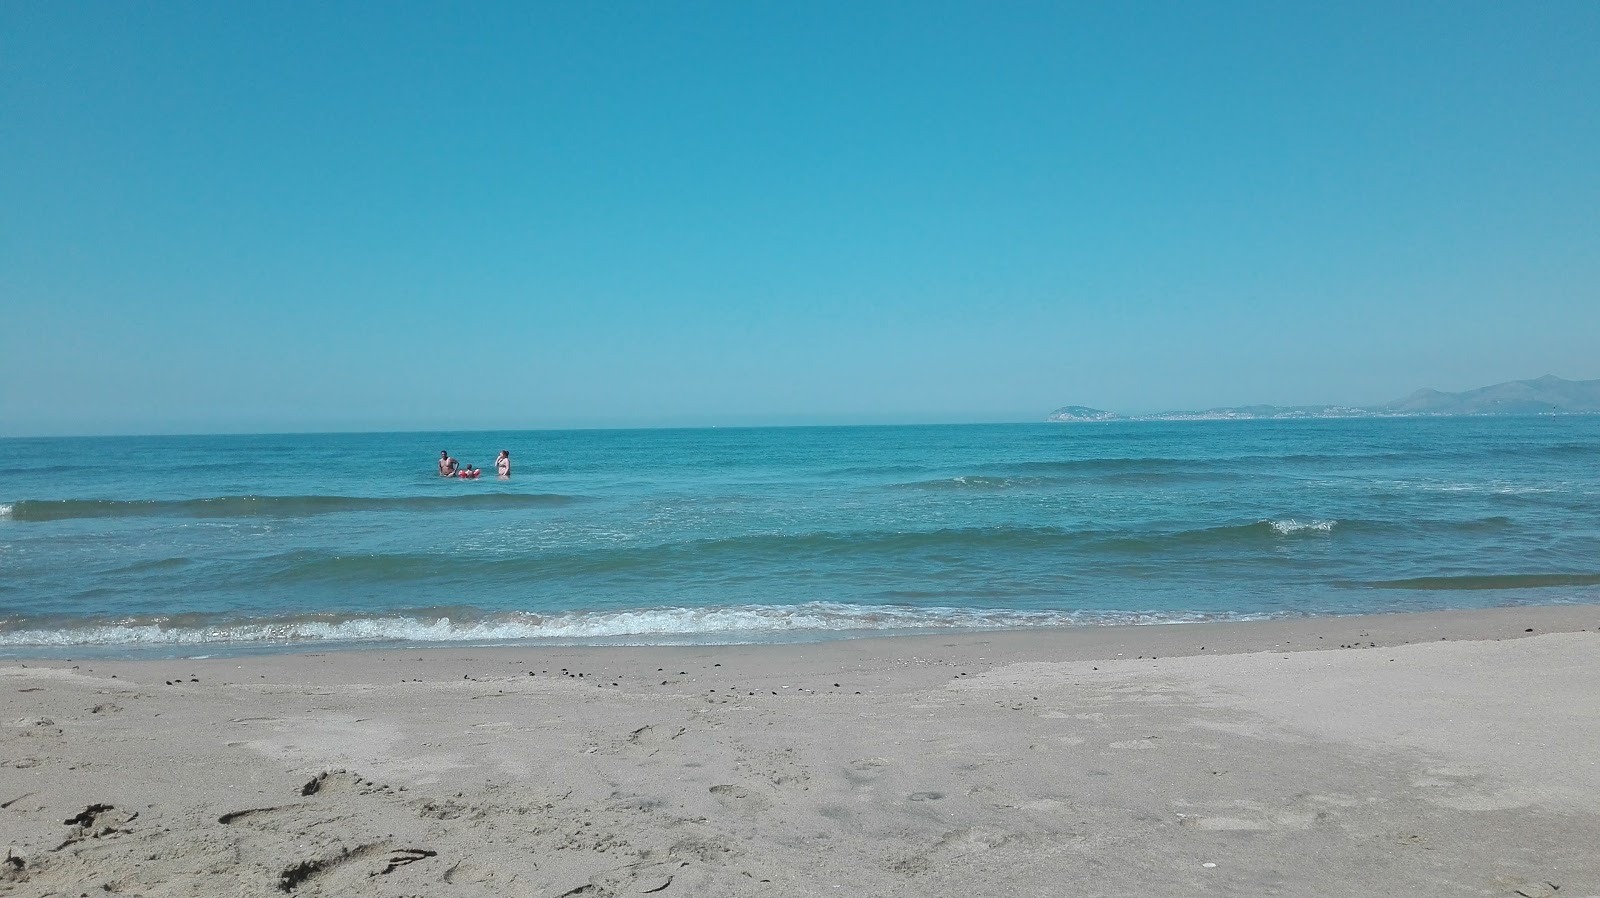 Foto de Marina di Minturno beach - lugar popular entre os apreciadores de relaxamento